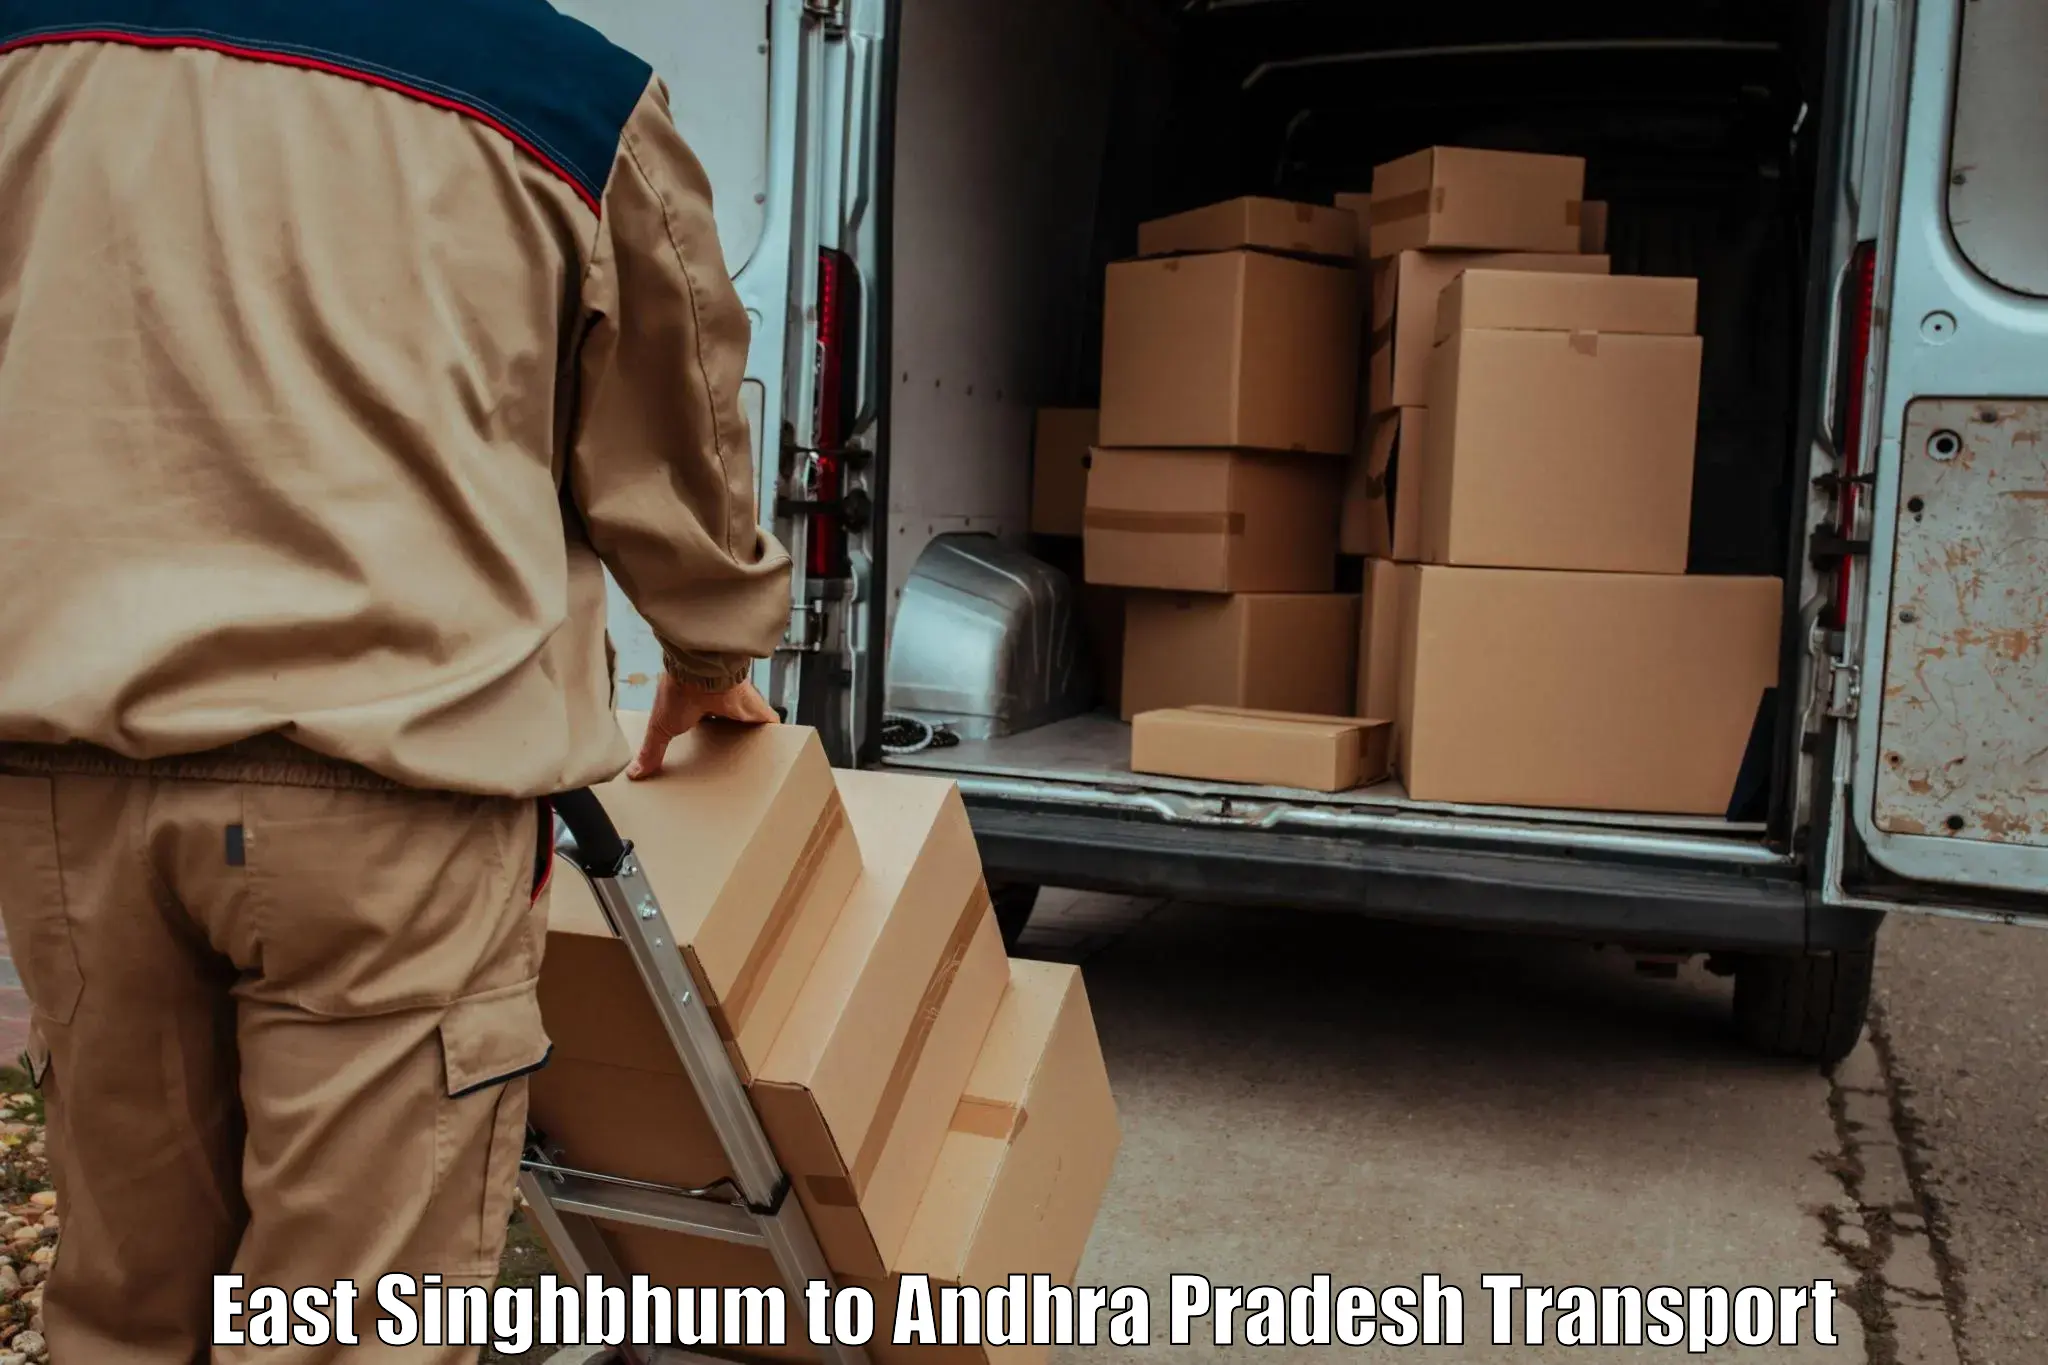 Nearest transport service East Singhbhum to Chodavaram